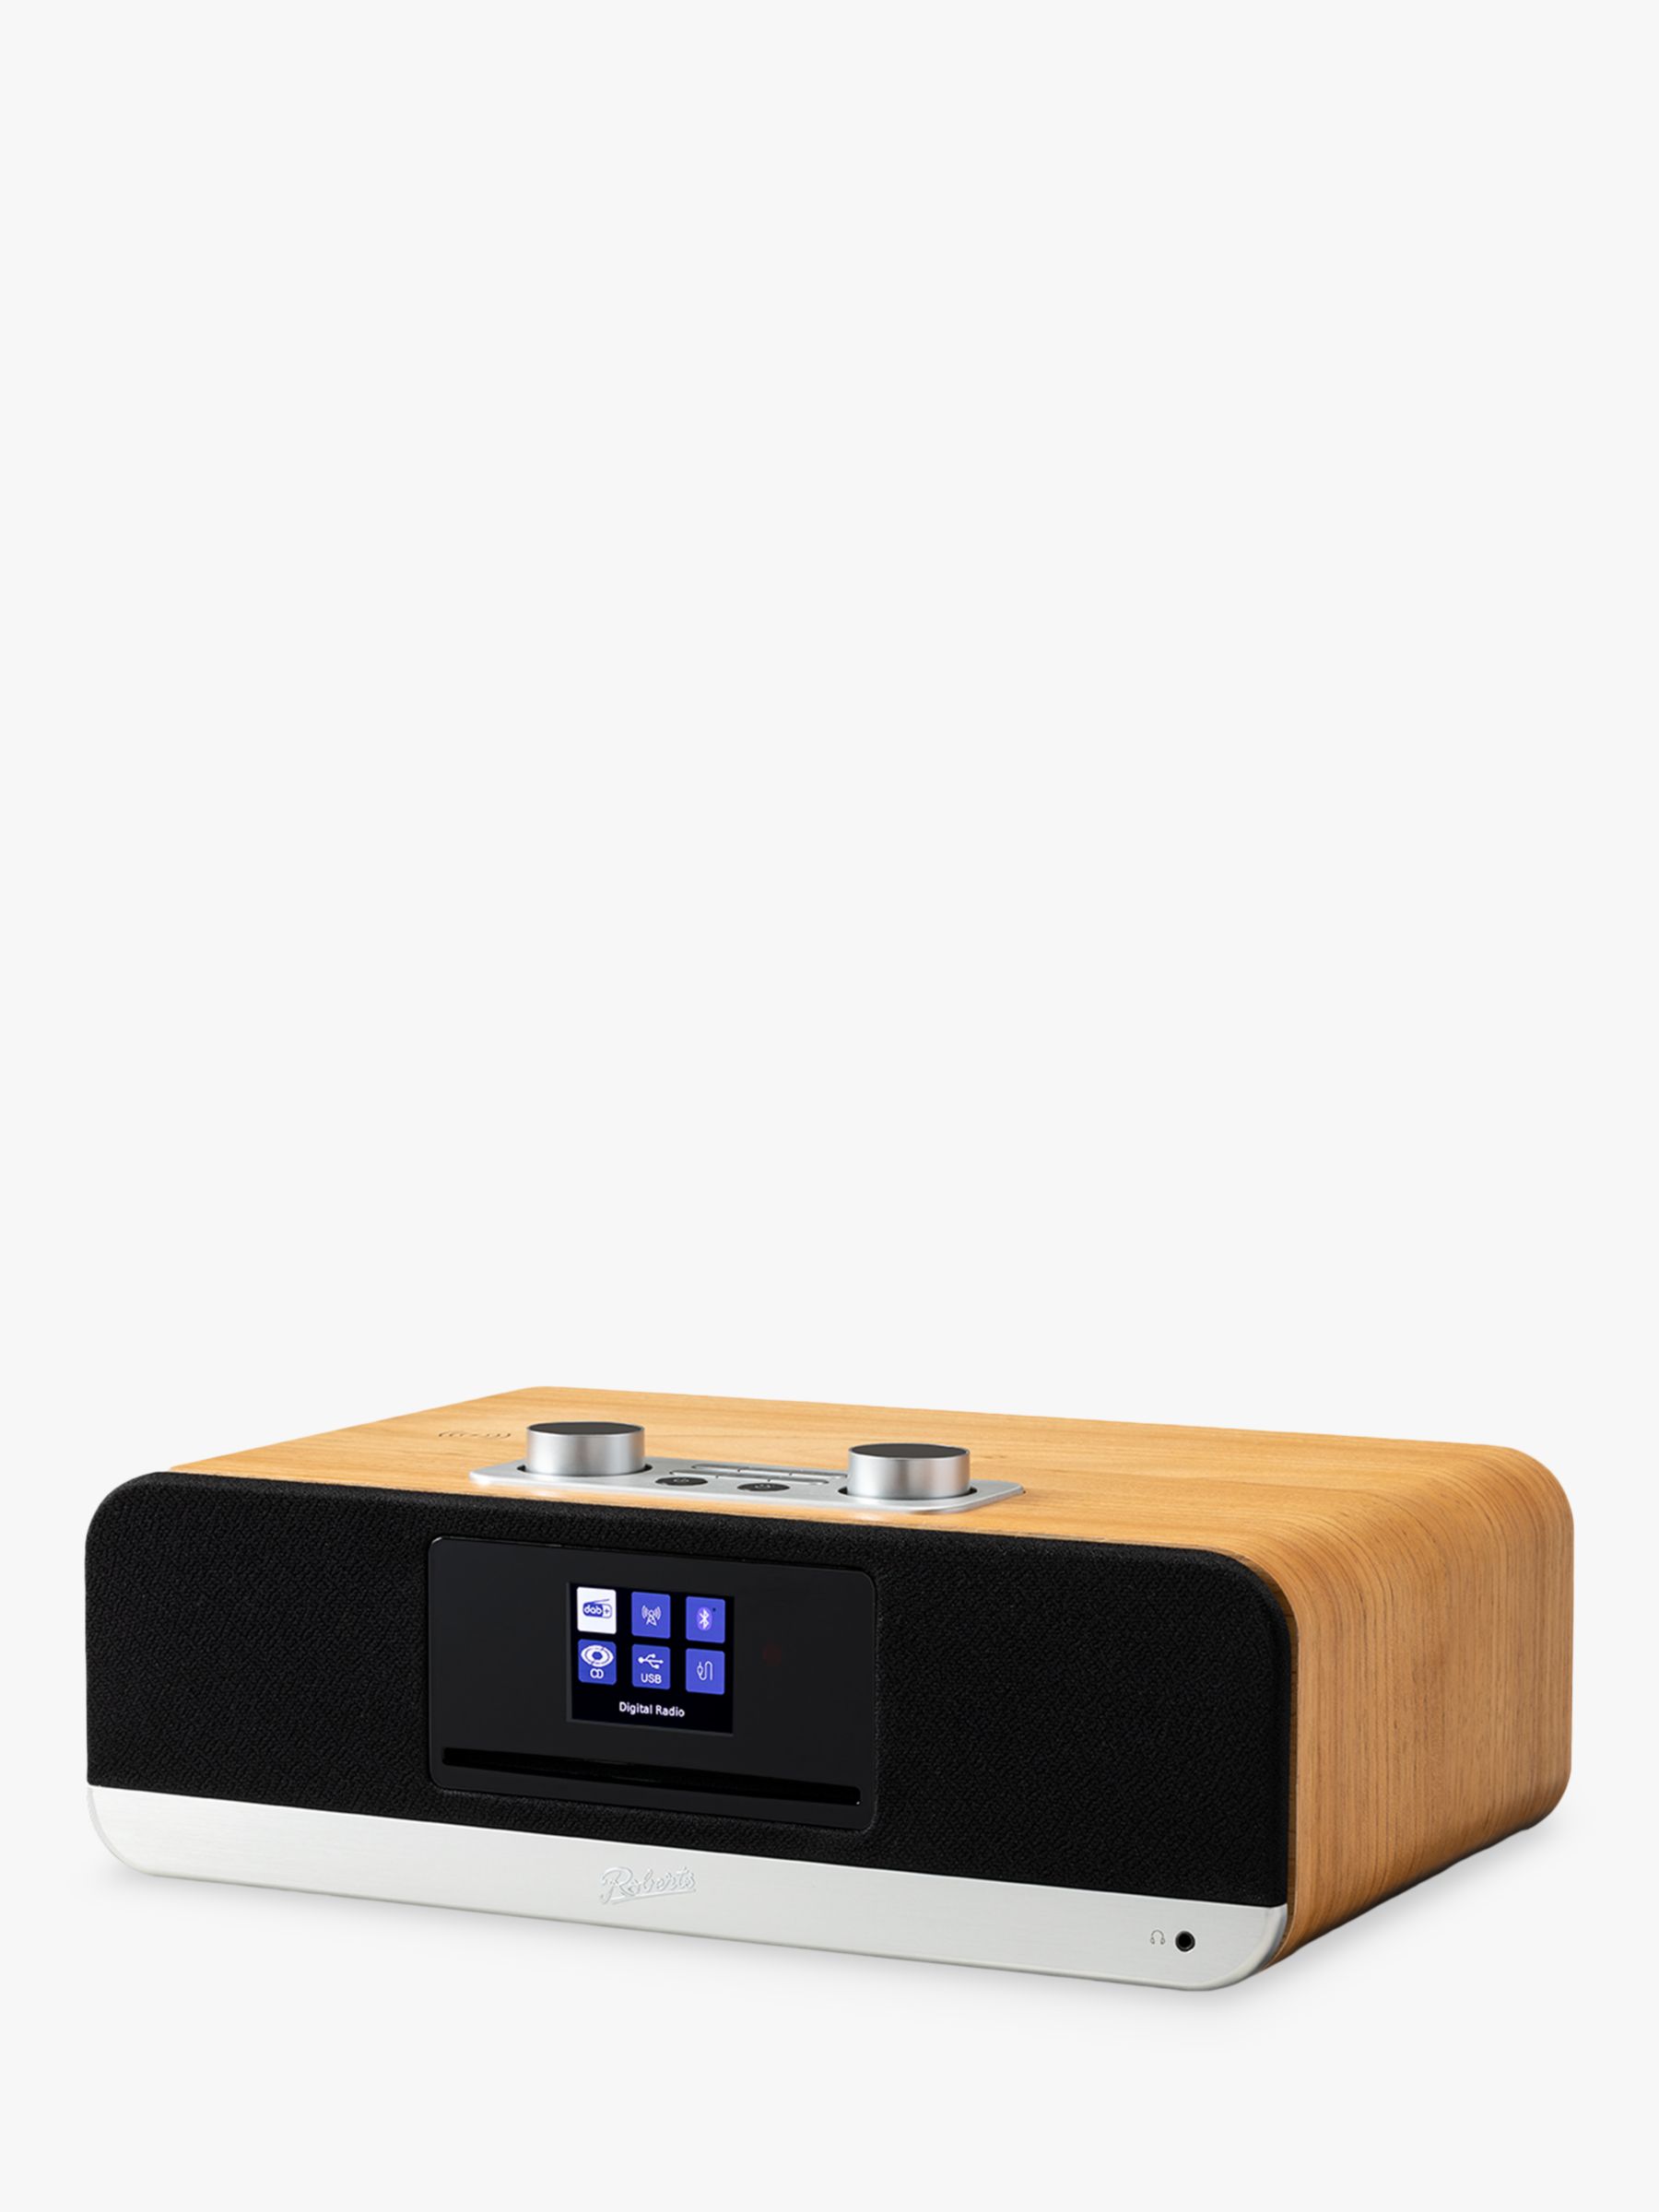 Roberts Blutune 300 Radio, Wood DAB/FM/CD Bluetooth